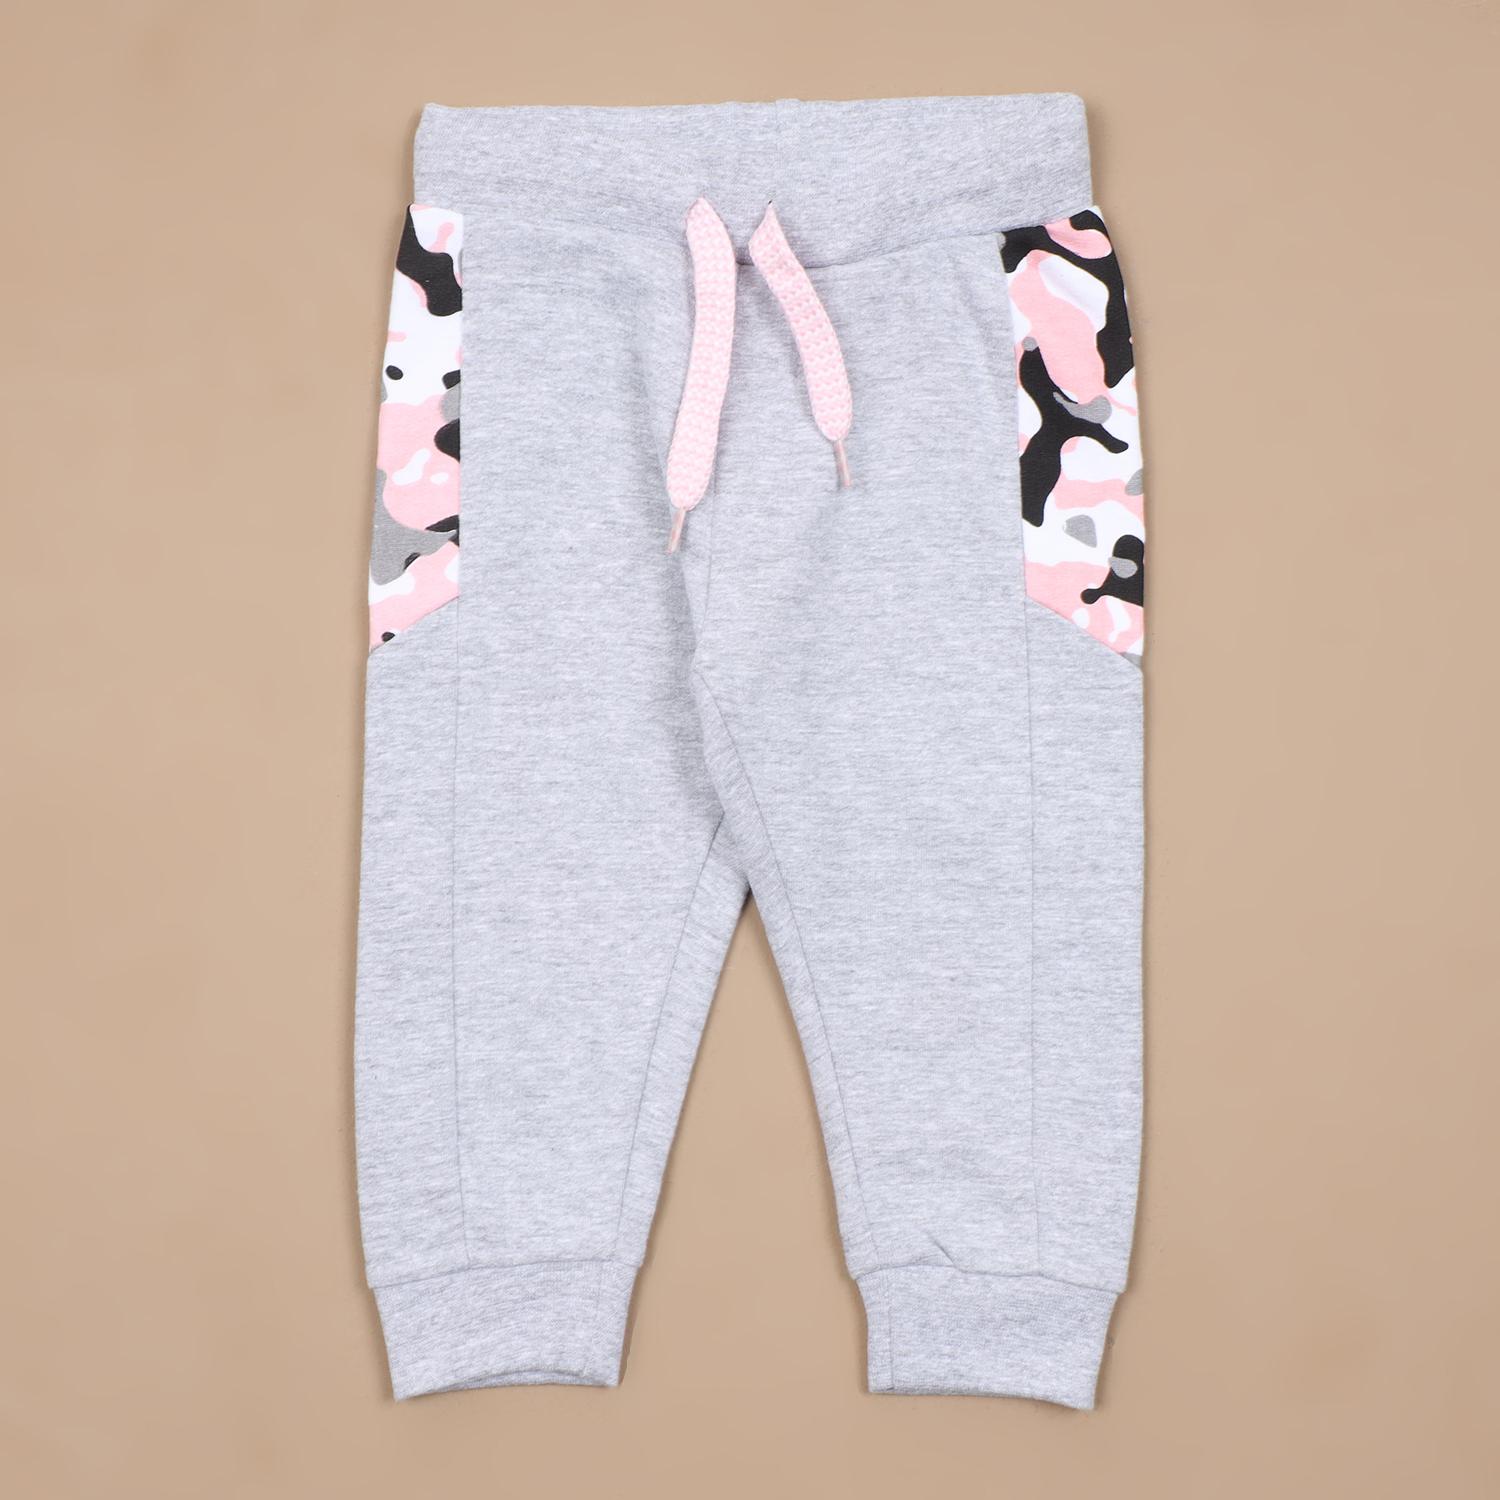 Unisex child fleece Track Suit-Grey & Pink